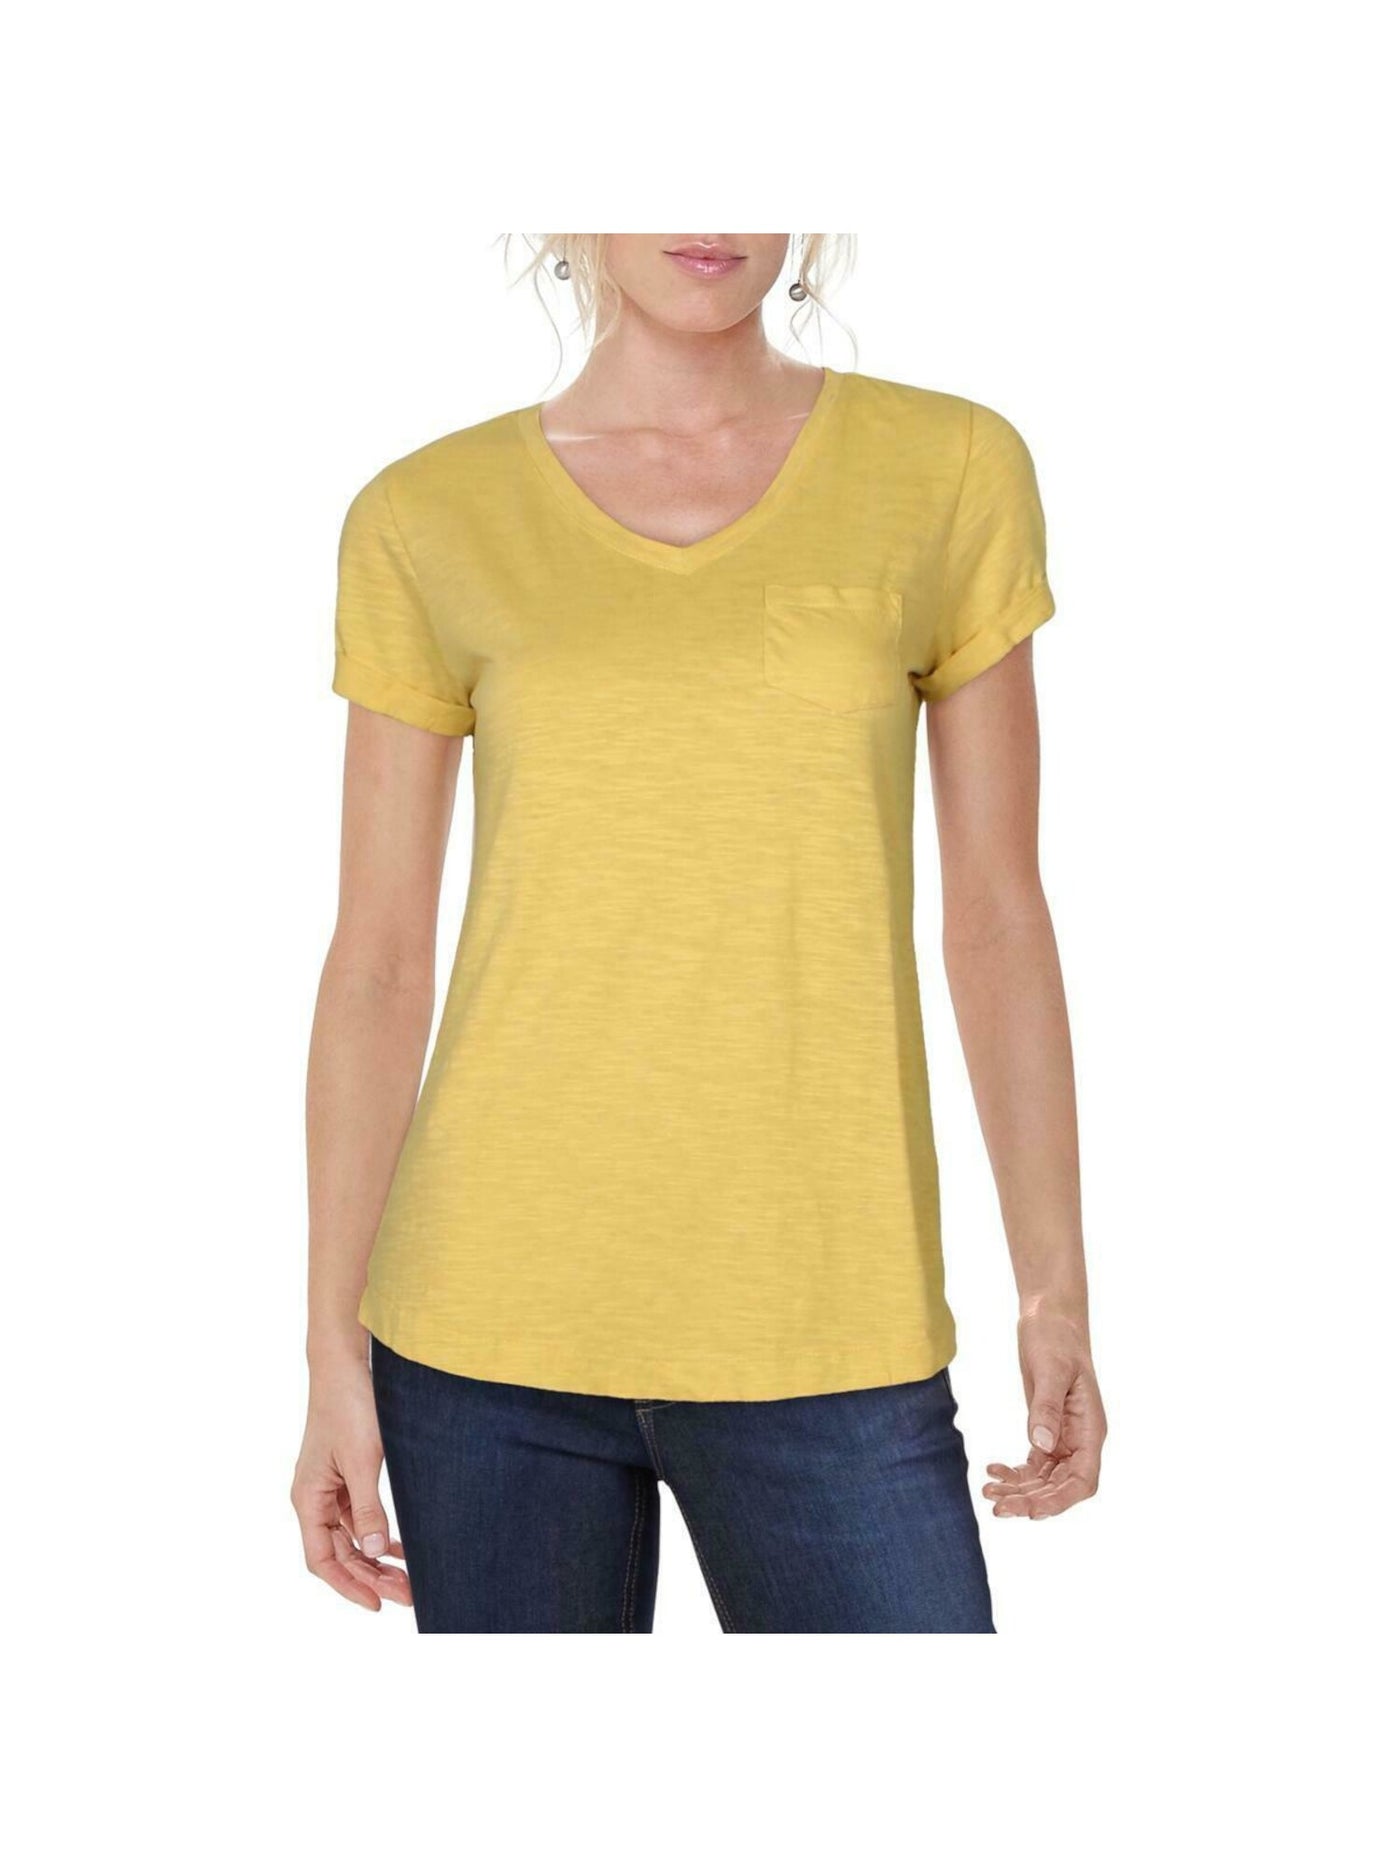 STYLE & COMPANY Womens Gold Pocket V Neck T-Shirt Plus PXL